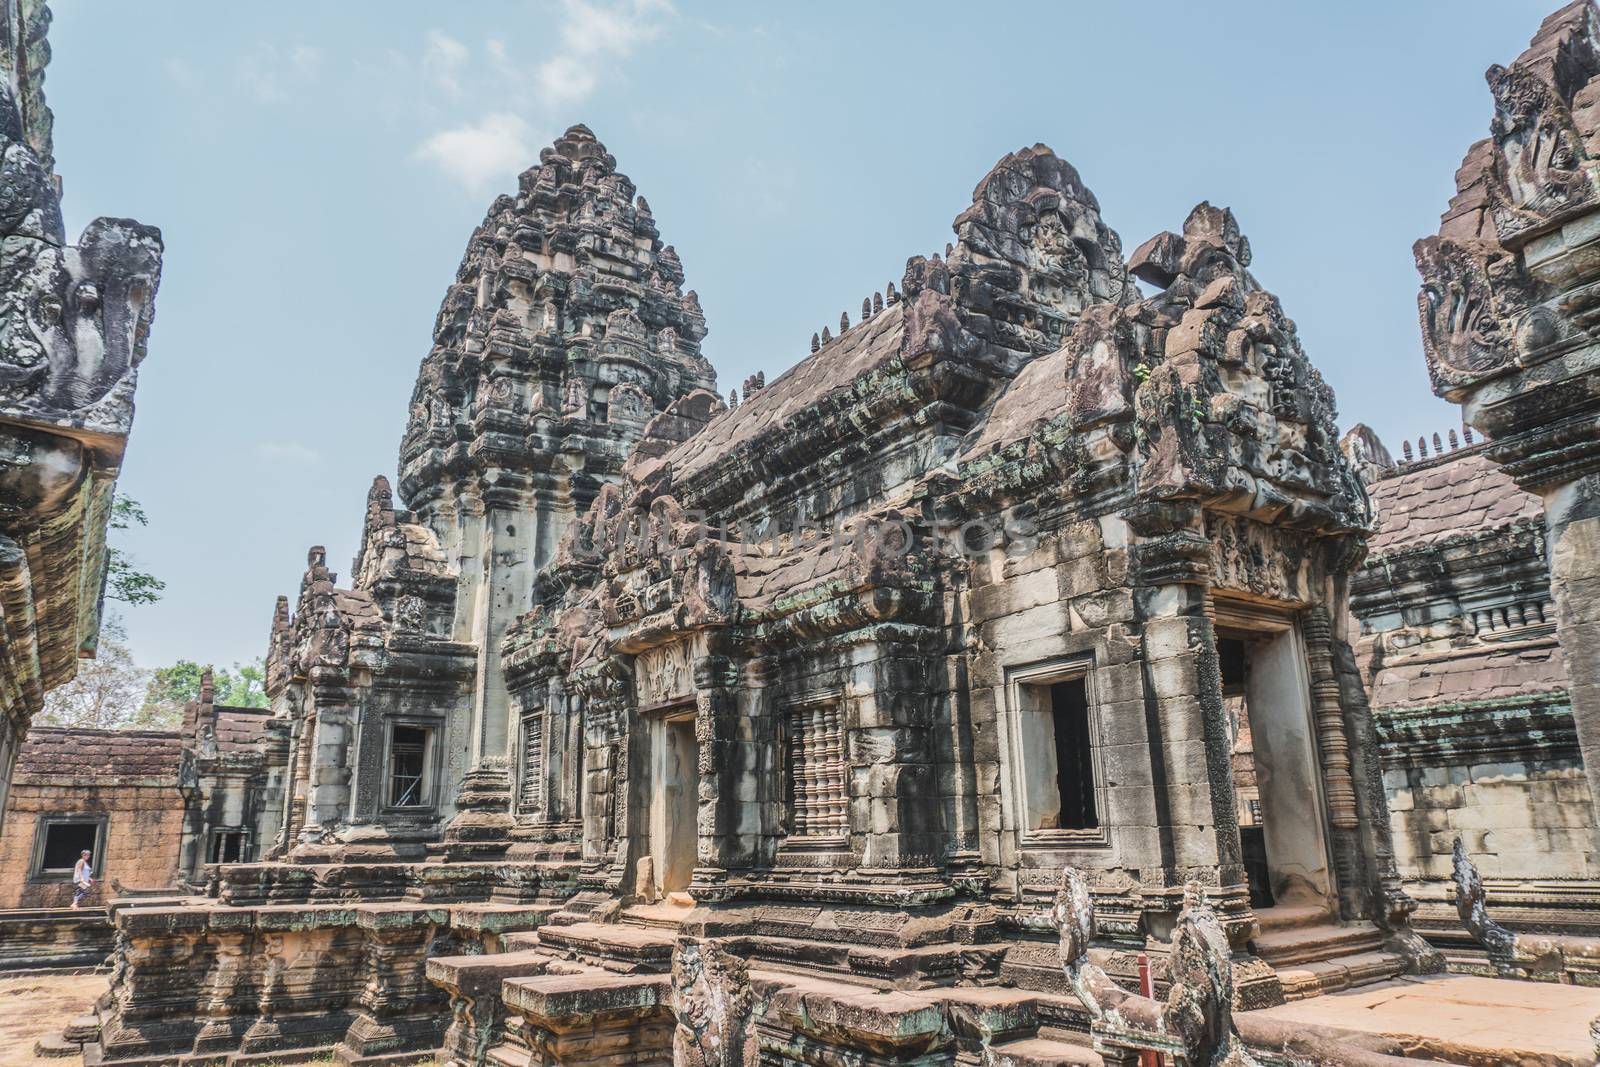 Ancient Angkor Wat Ruins Panorama. Banteay Srei Temple. Siem Reap, Cambodia 